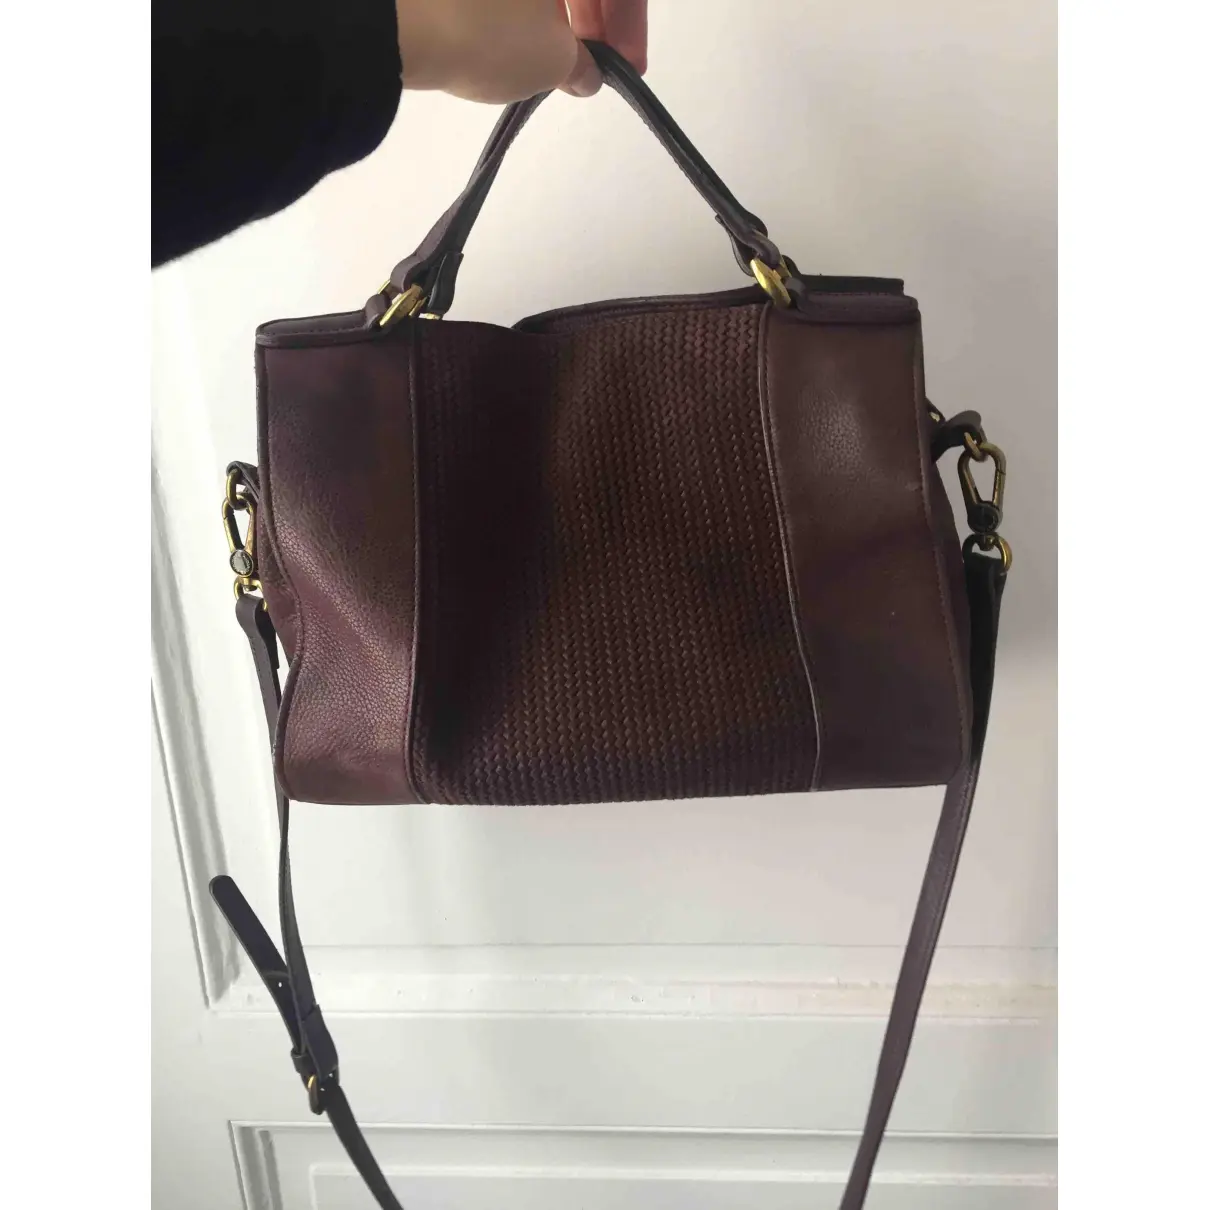 Buy Nat & Nin Leather handbag online